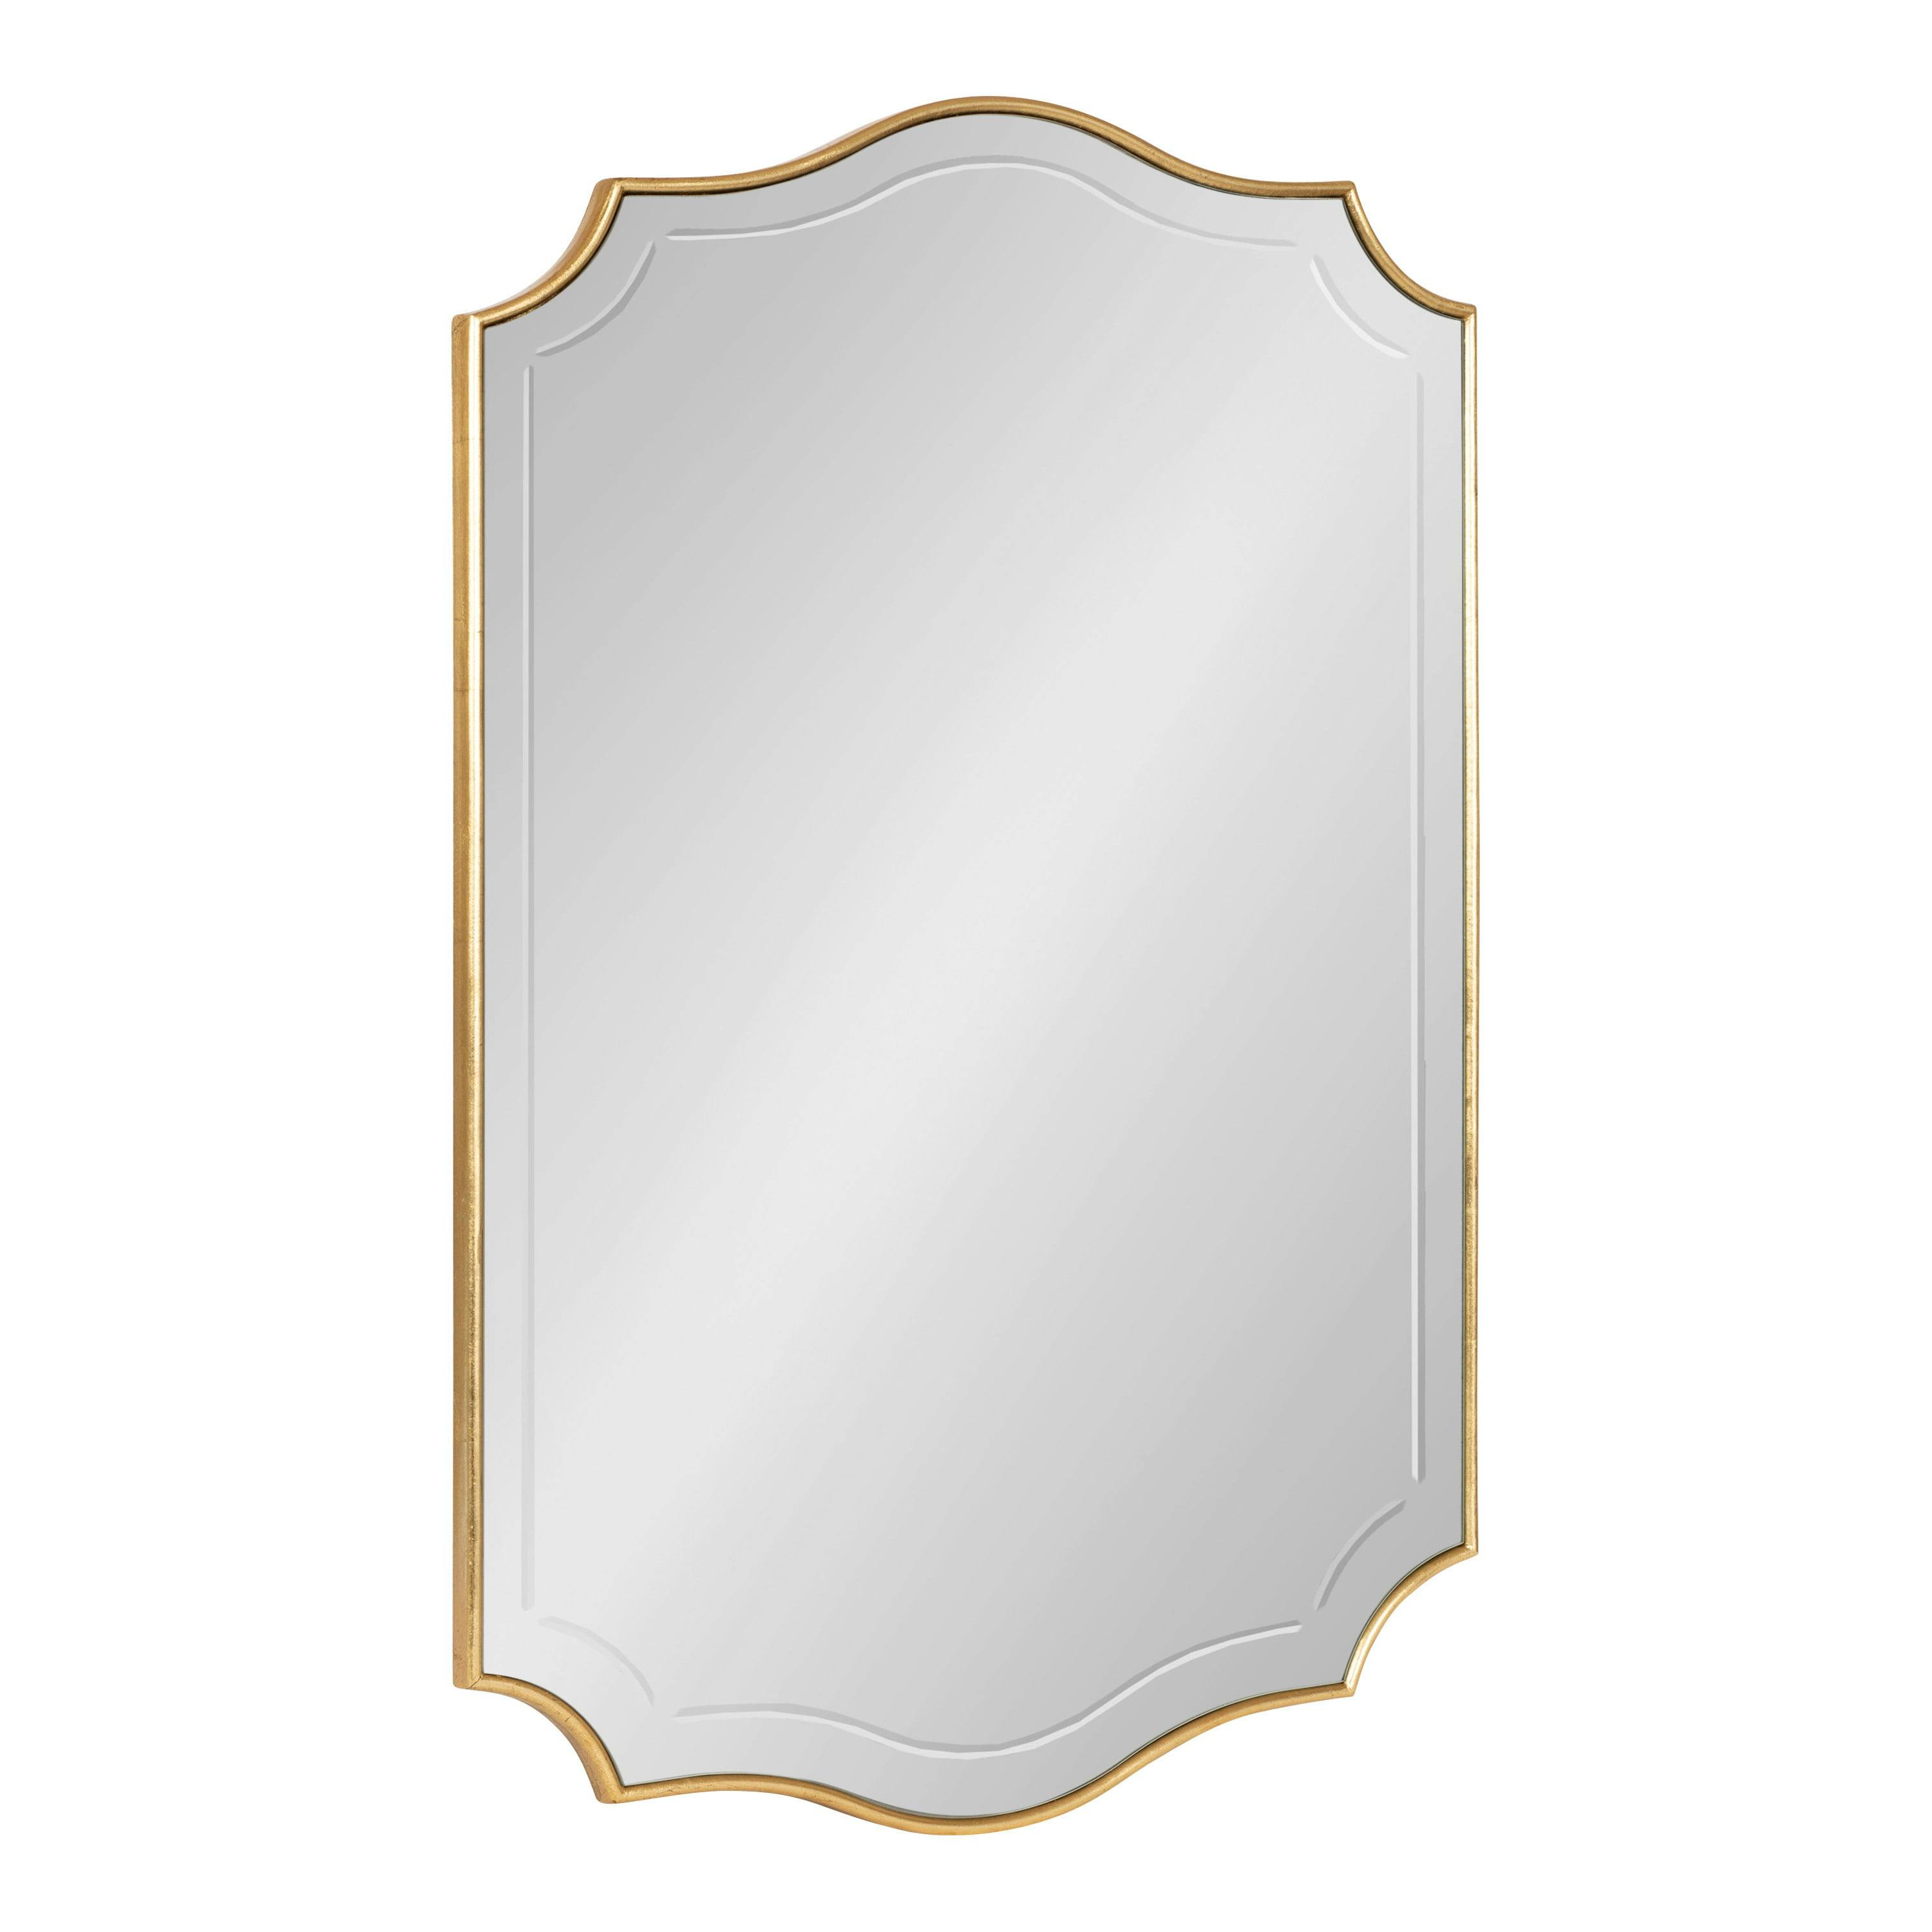 Hollyn Glam Scalloped 34" Gold Leaf Rectangular Wall Mirror